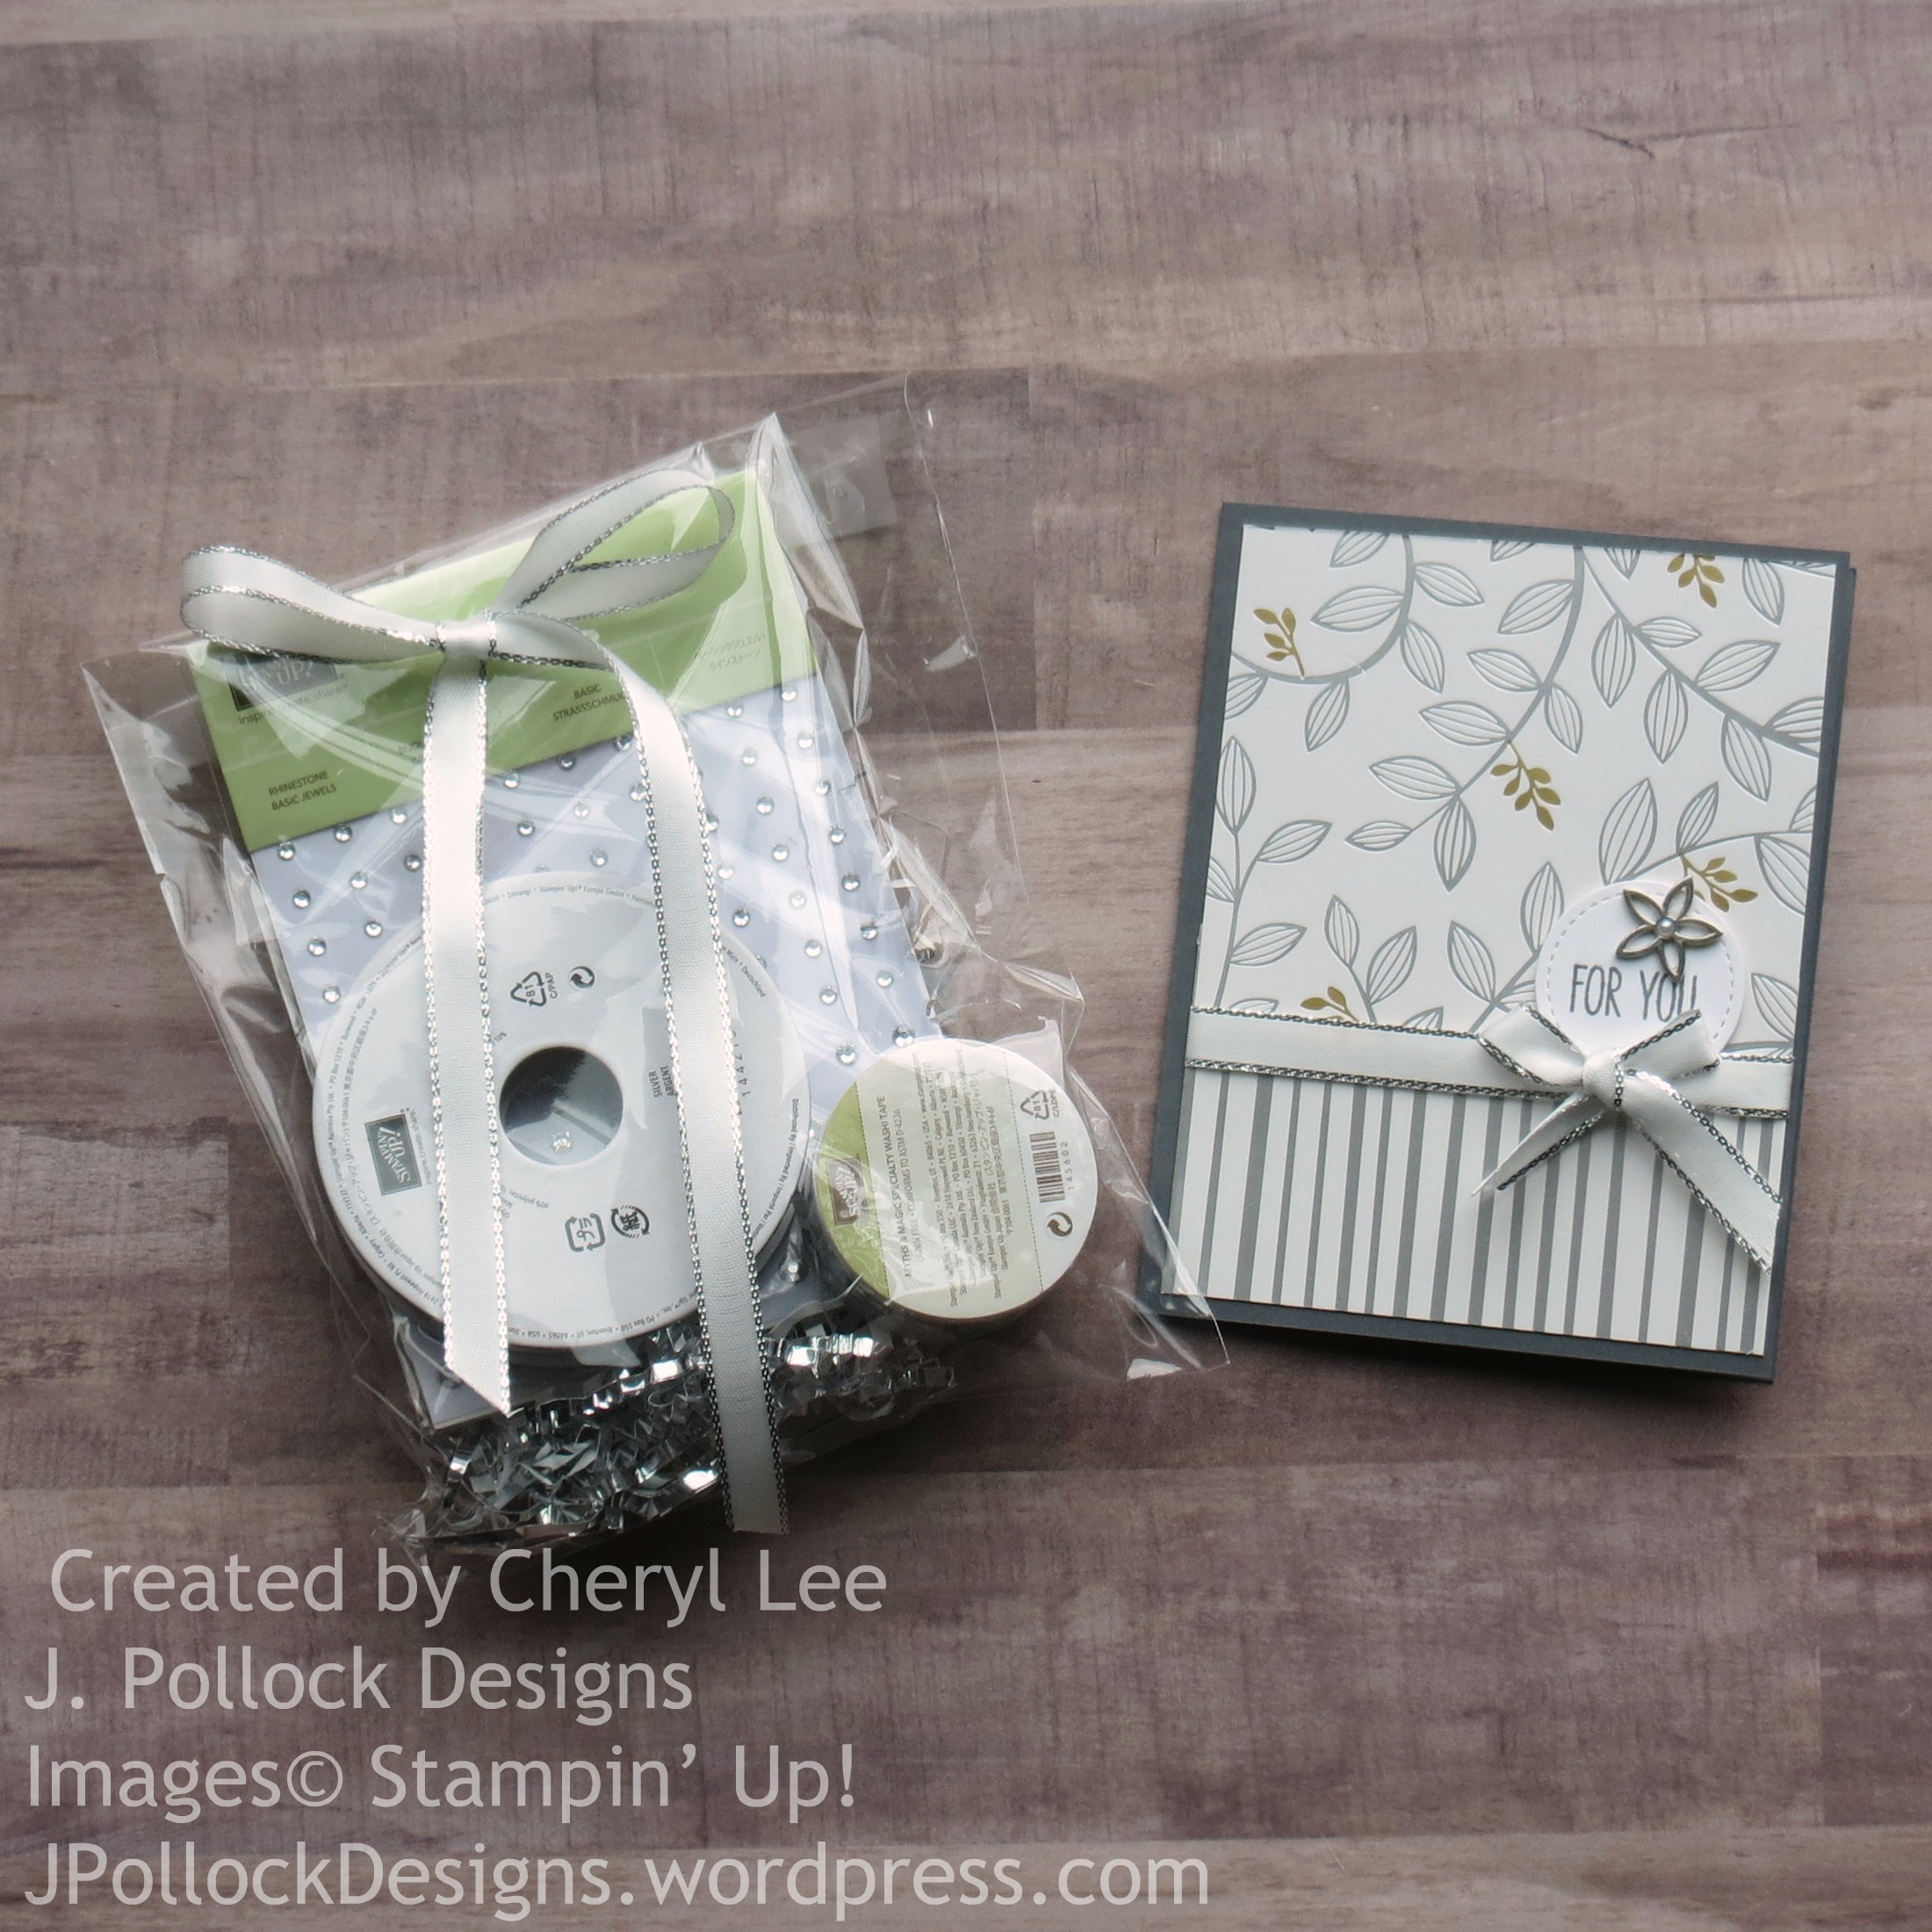 J. Pollock Designs - Stampin' Up! - Cheryl Lee